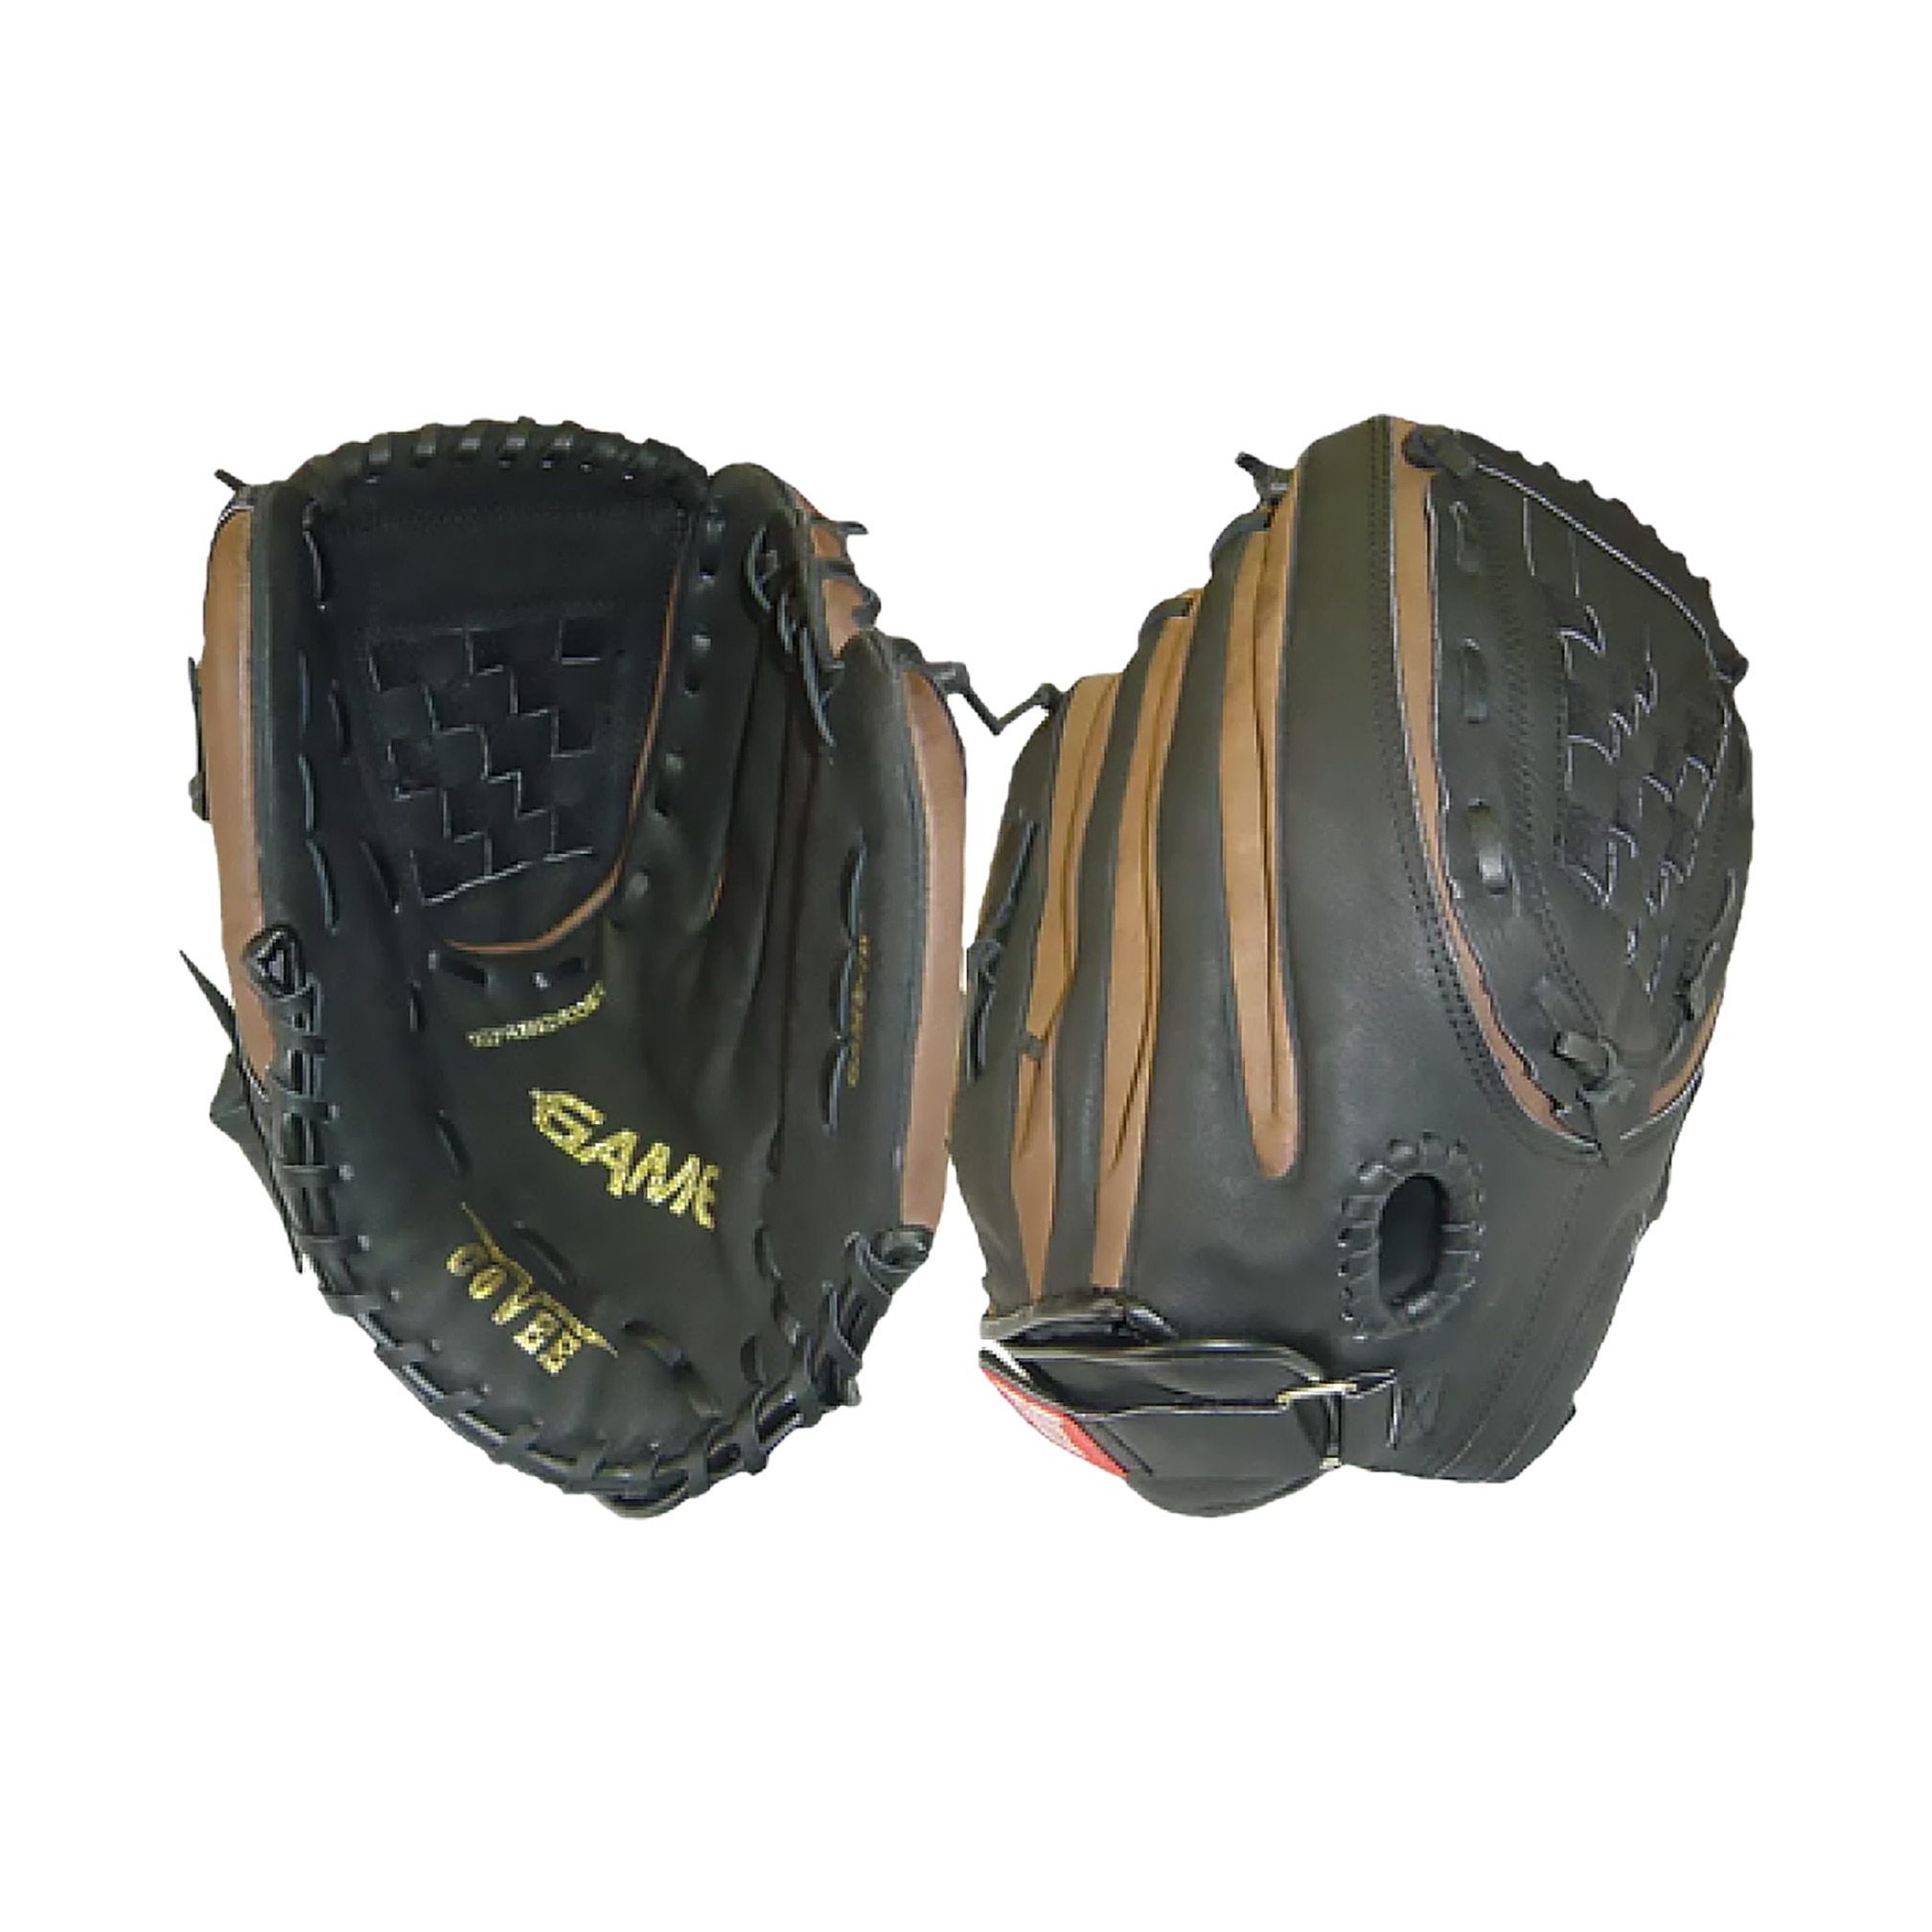 Baseball glove, right catcher, 11 inch